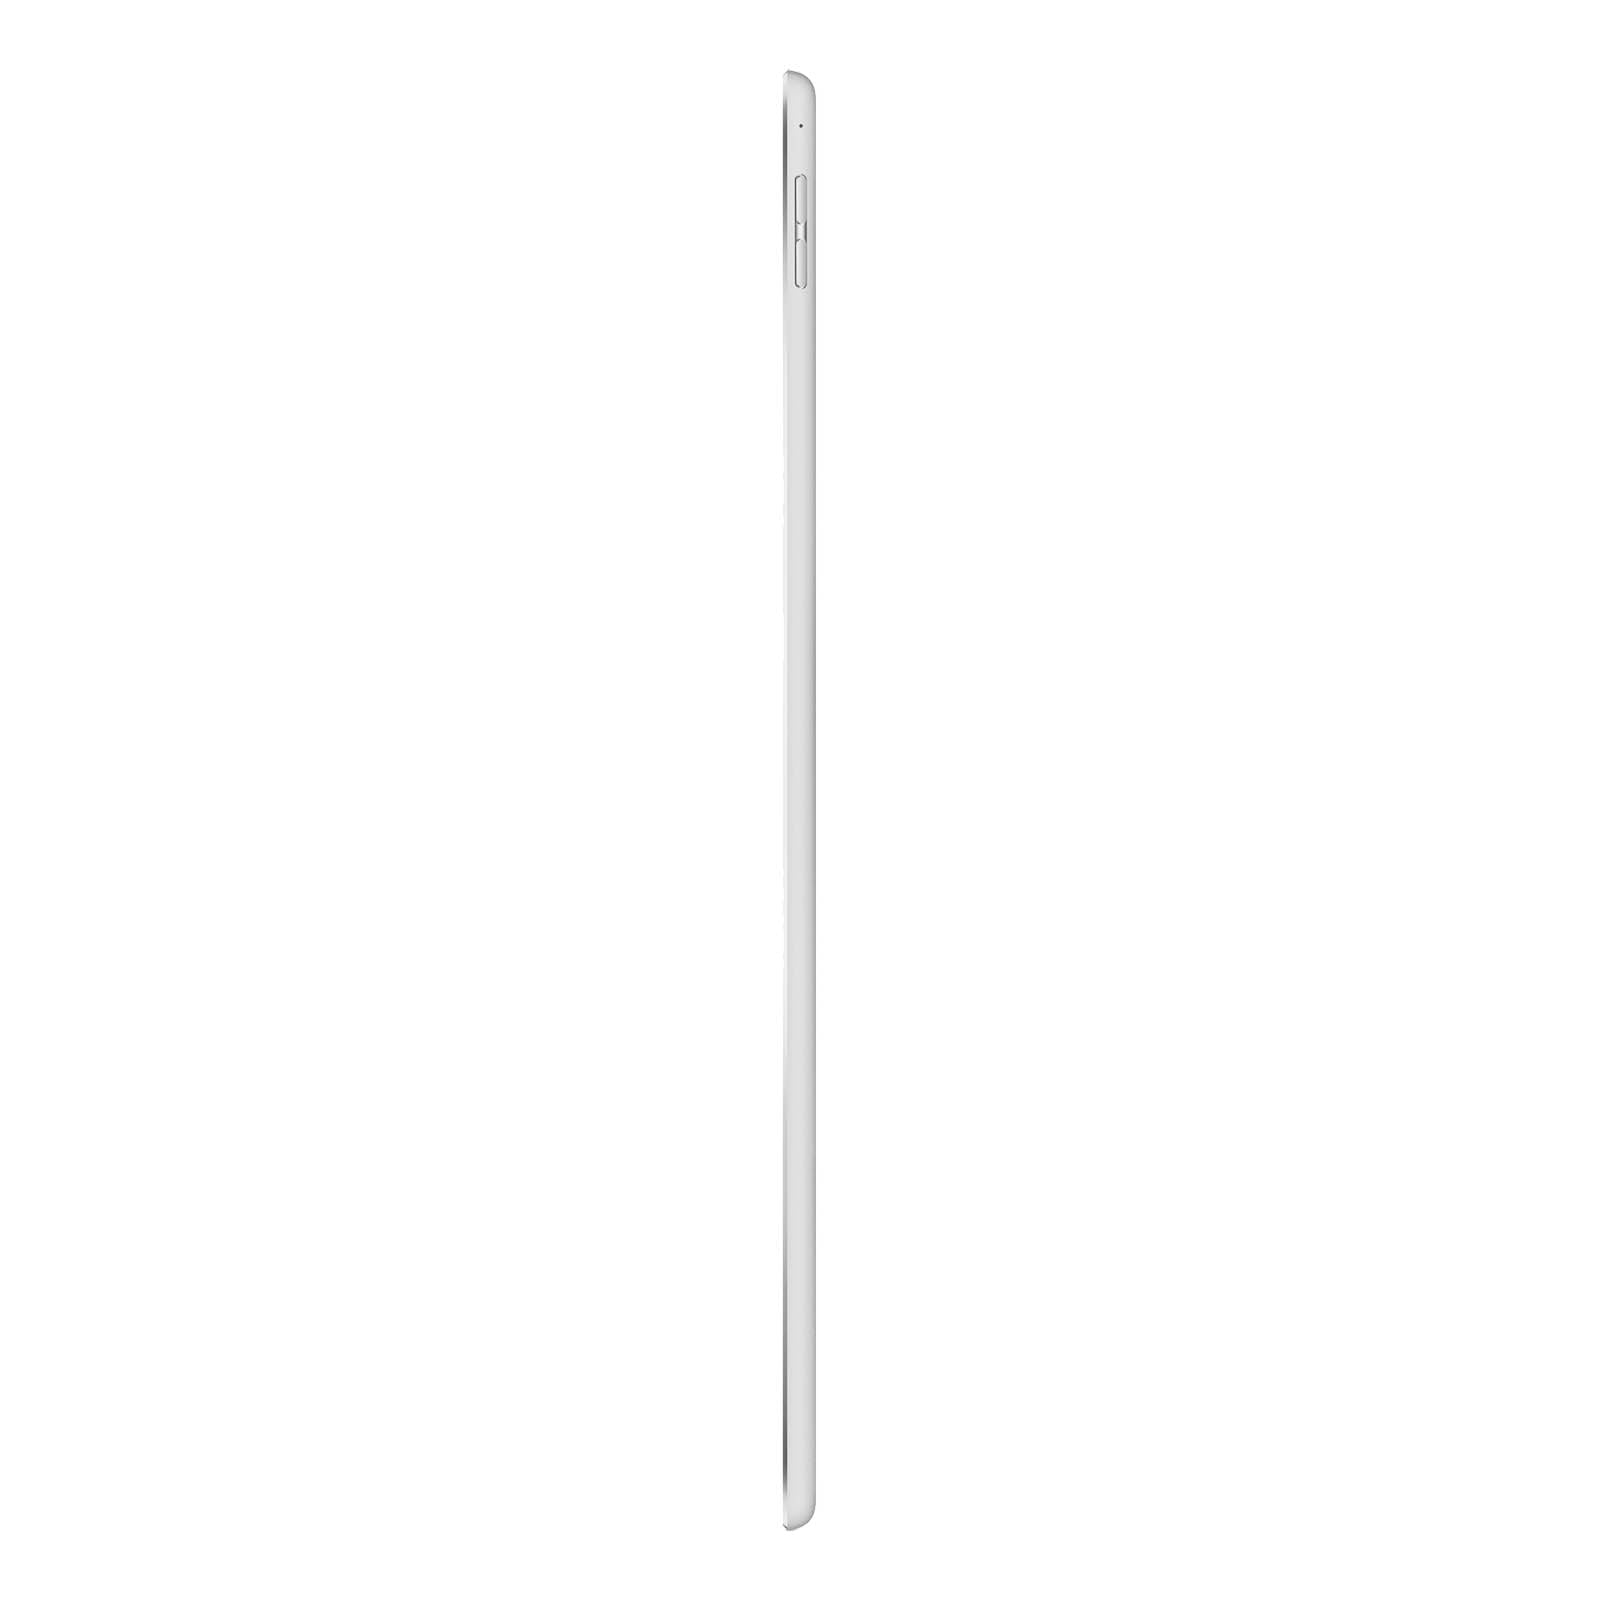 iPad Pro 12.9 Inch 1st Gen 256GB Silver Good - WiFi